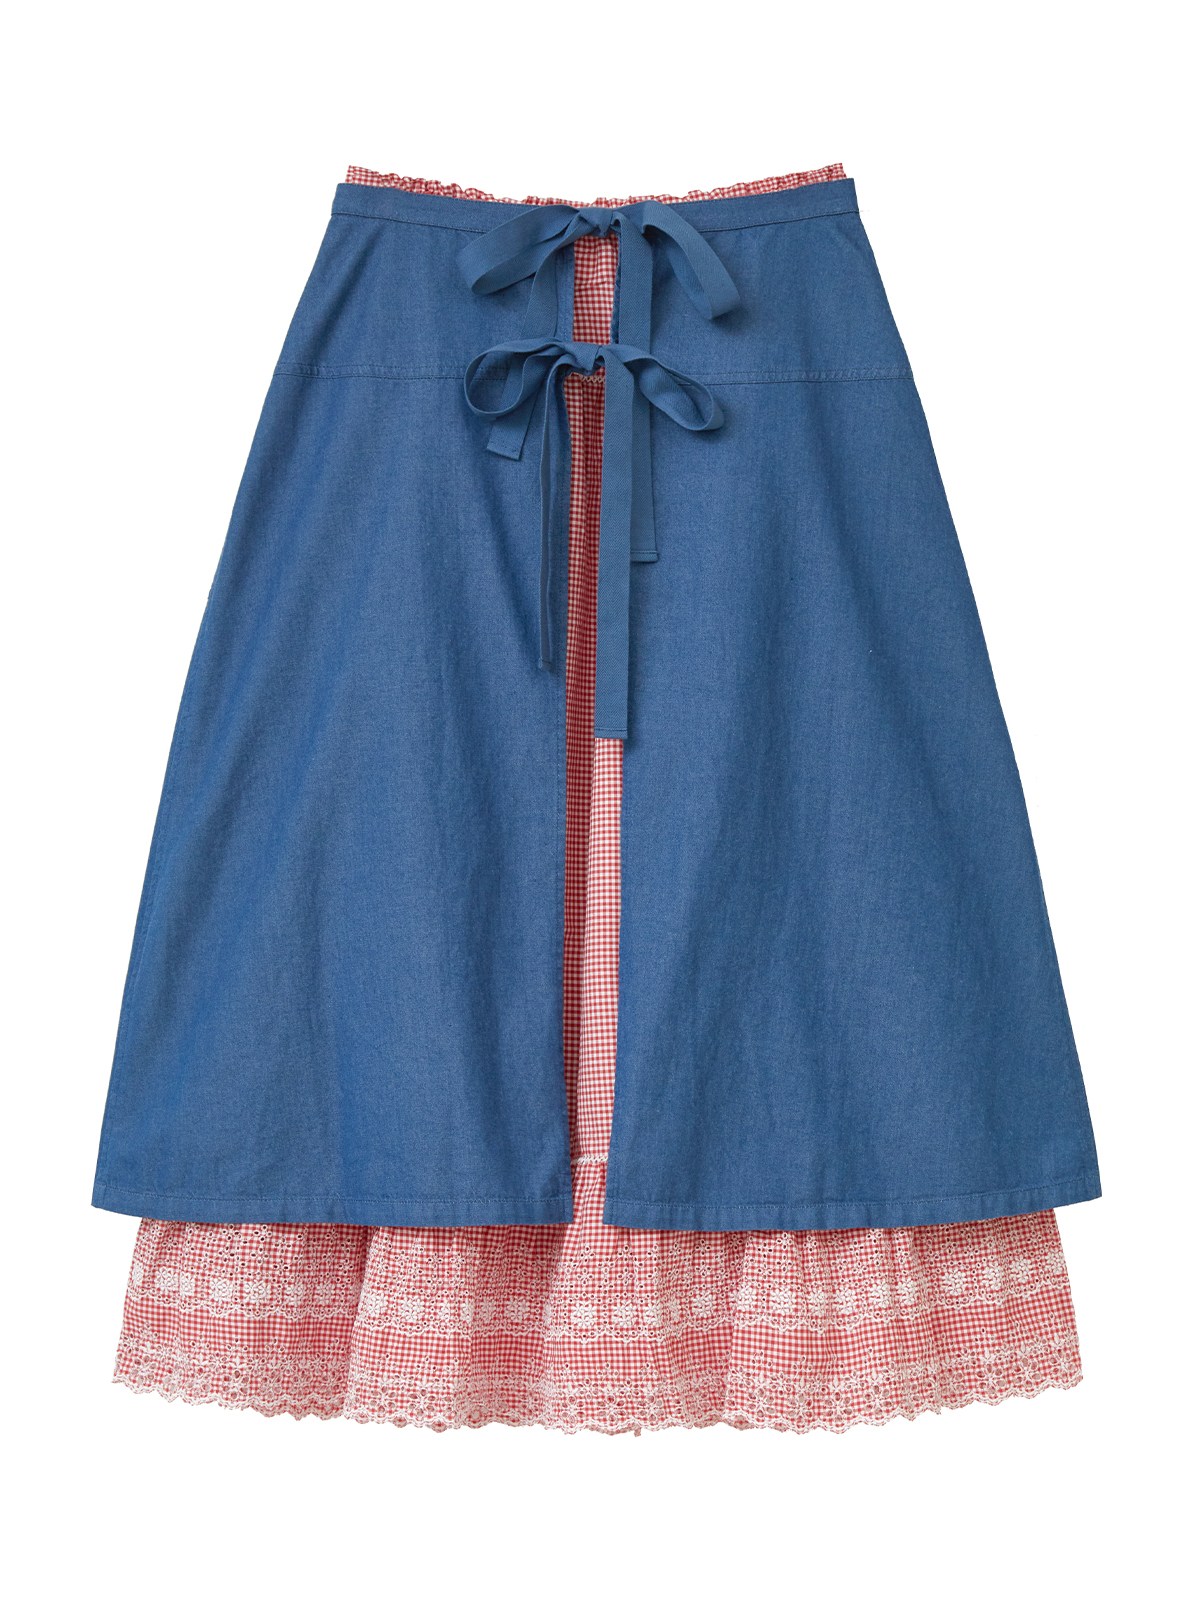 【OUTLET】バスケットうさぎ刺繍レイヤードスカート